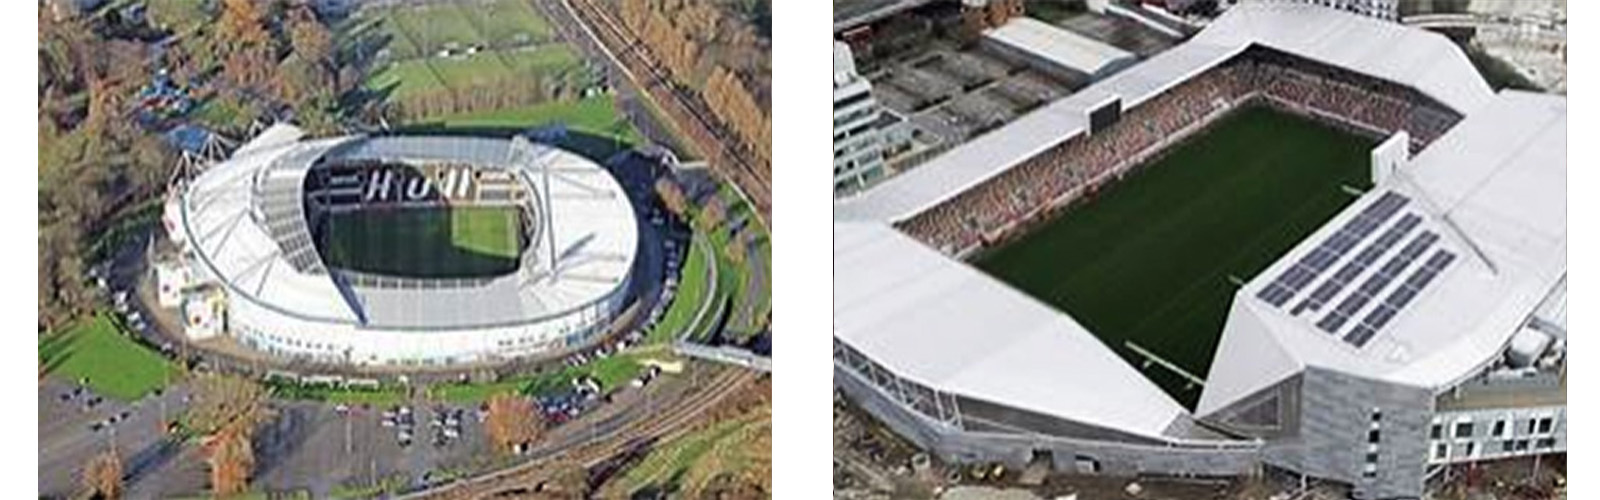 MKM Stadium, Hull 2002 ; Community Stadium, Brentford 2020